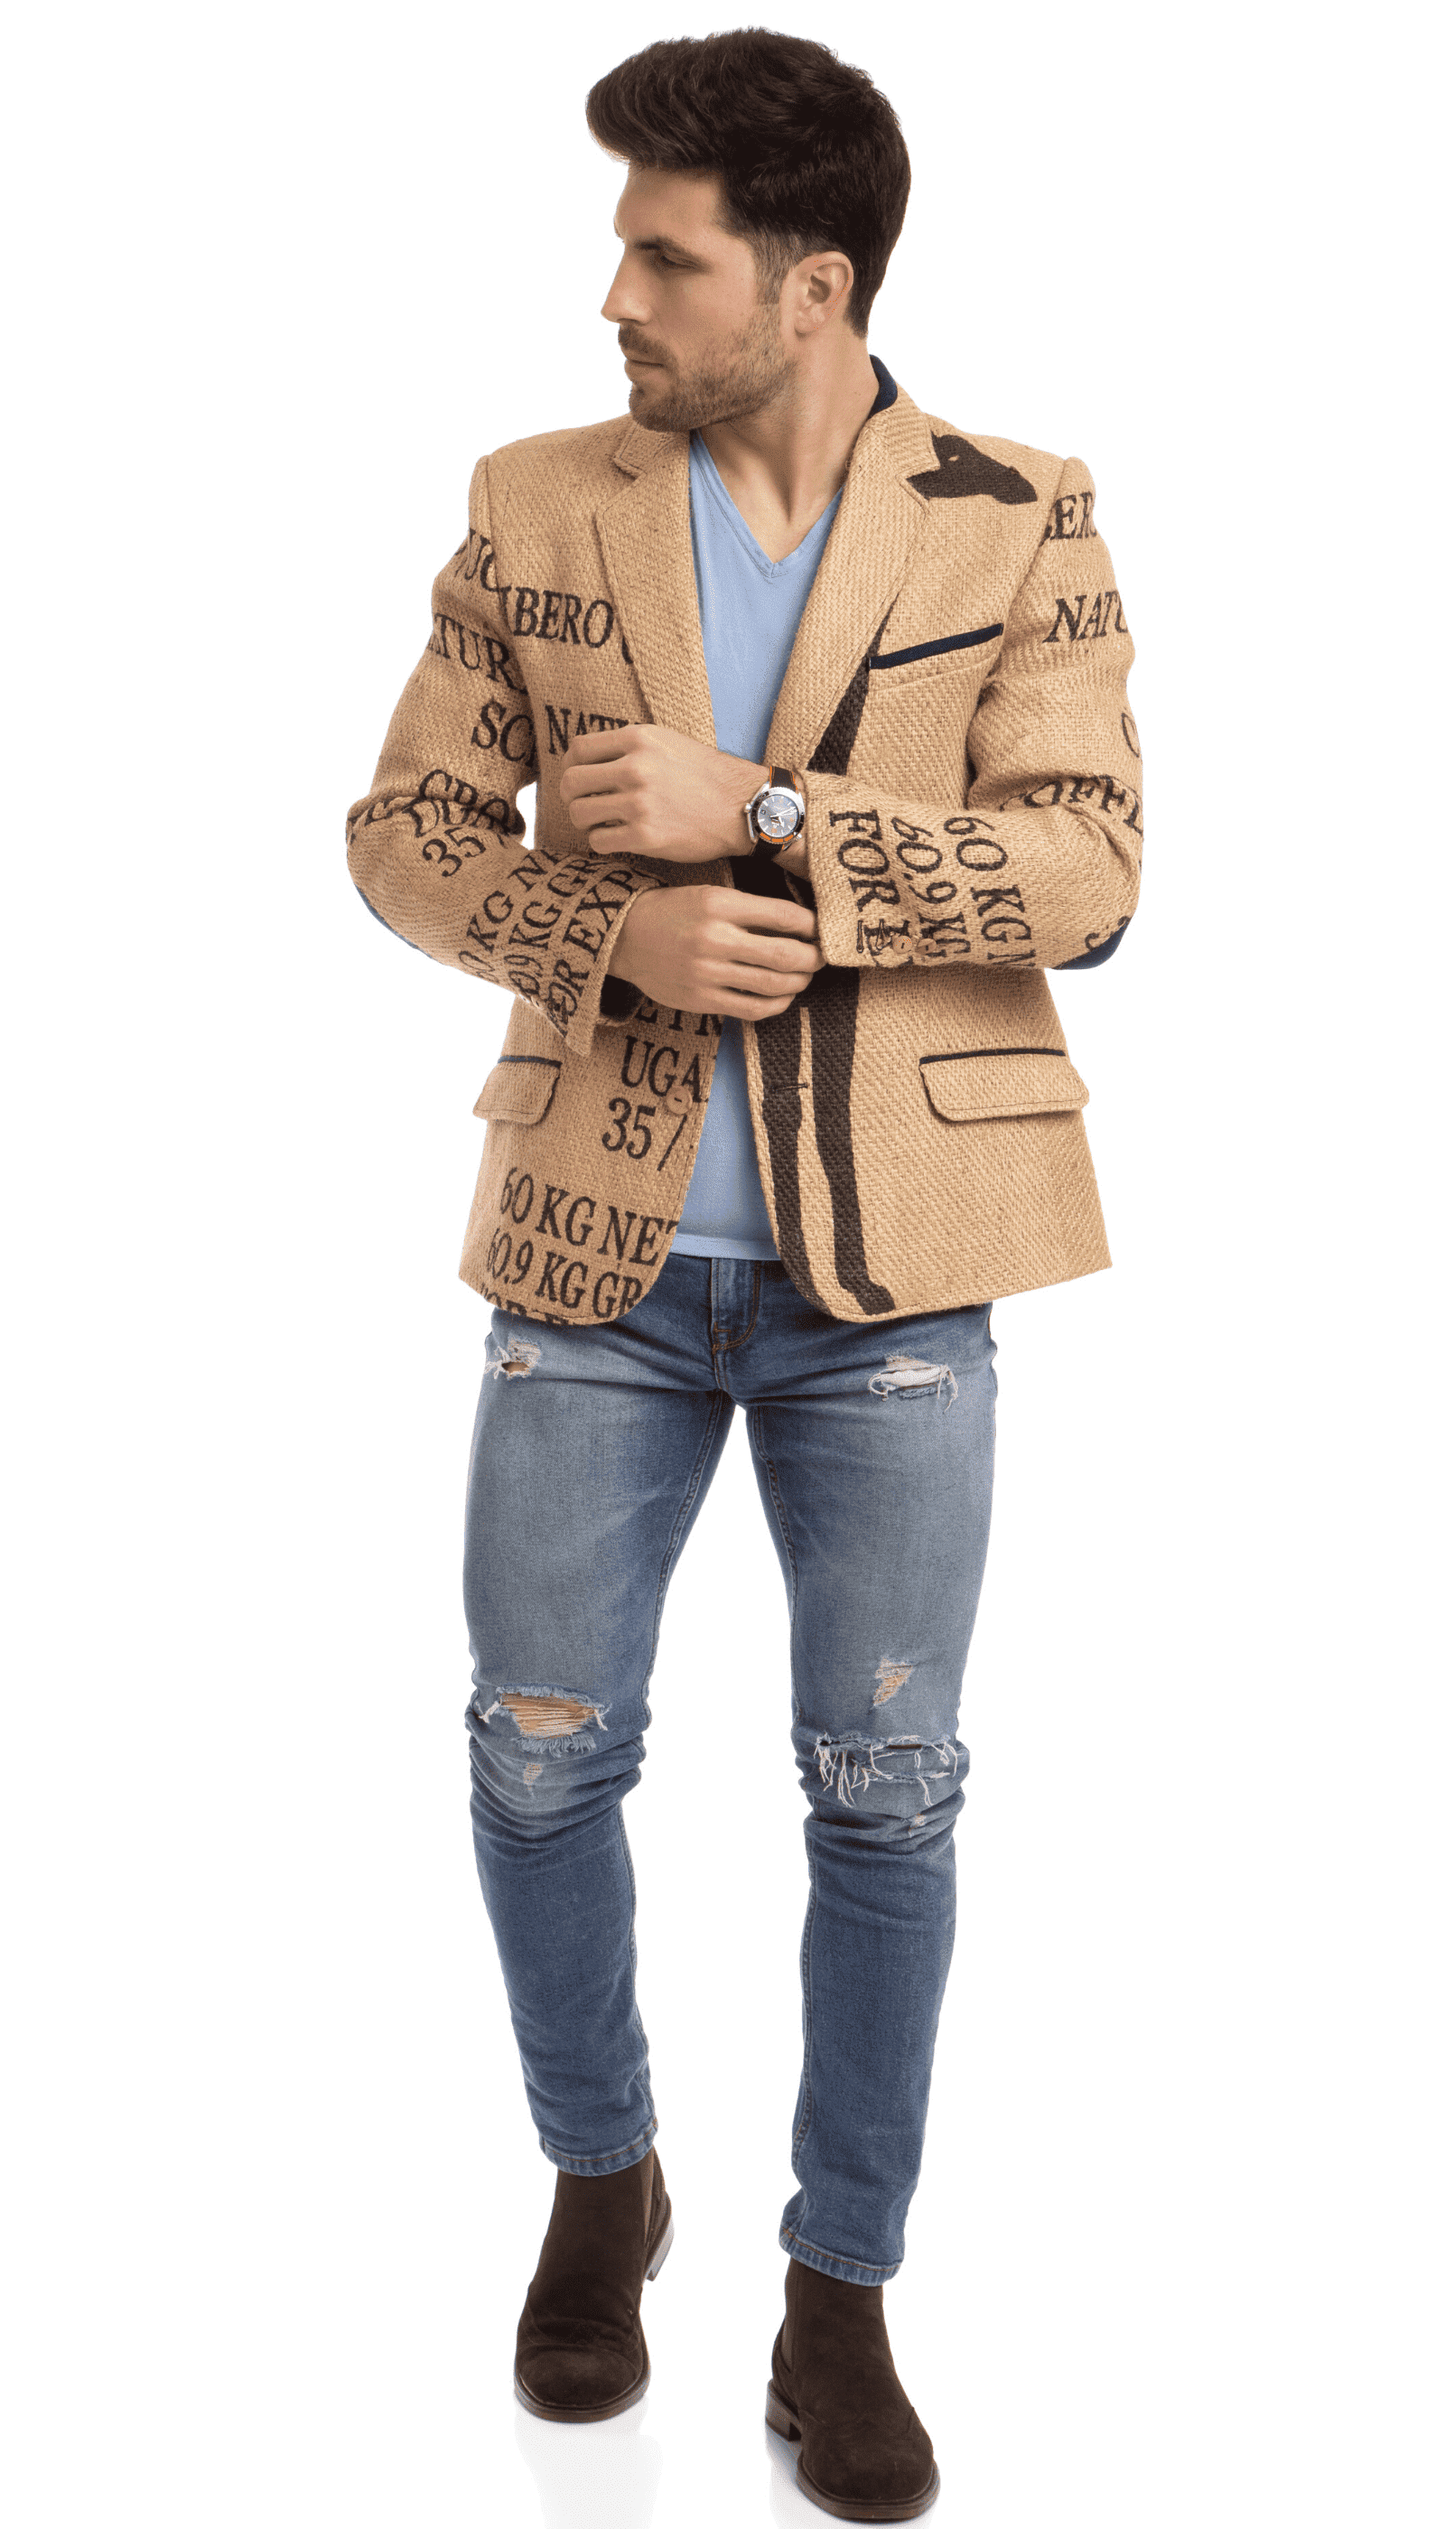 A classy eco-friendly jacket handmade in Germany of burlap coffee sacks